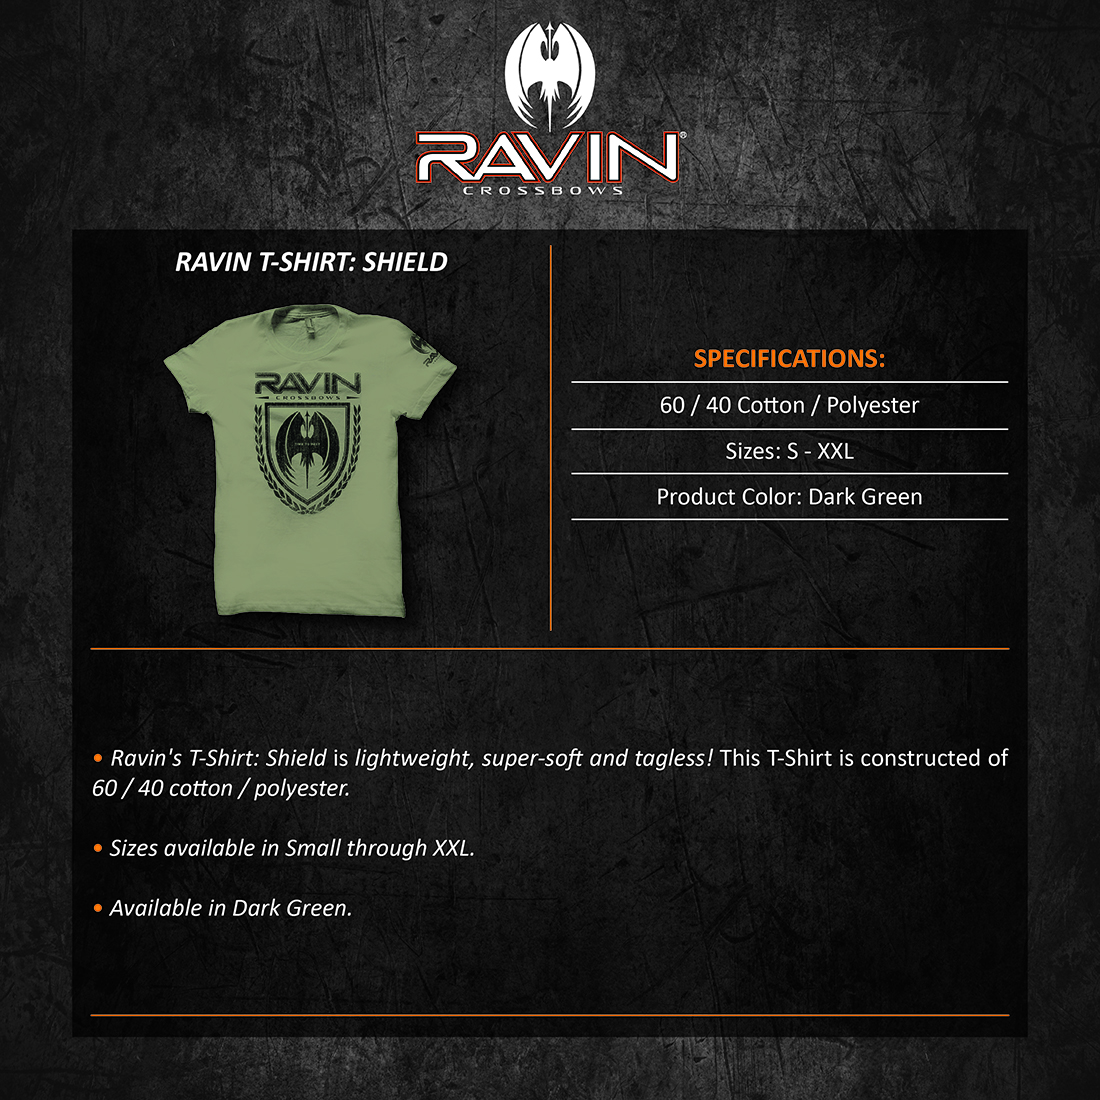 Ravin_Tshirt_Shield_Product_Description